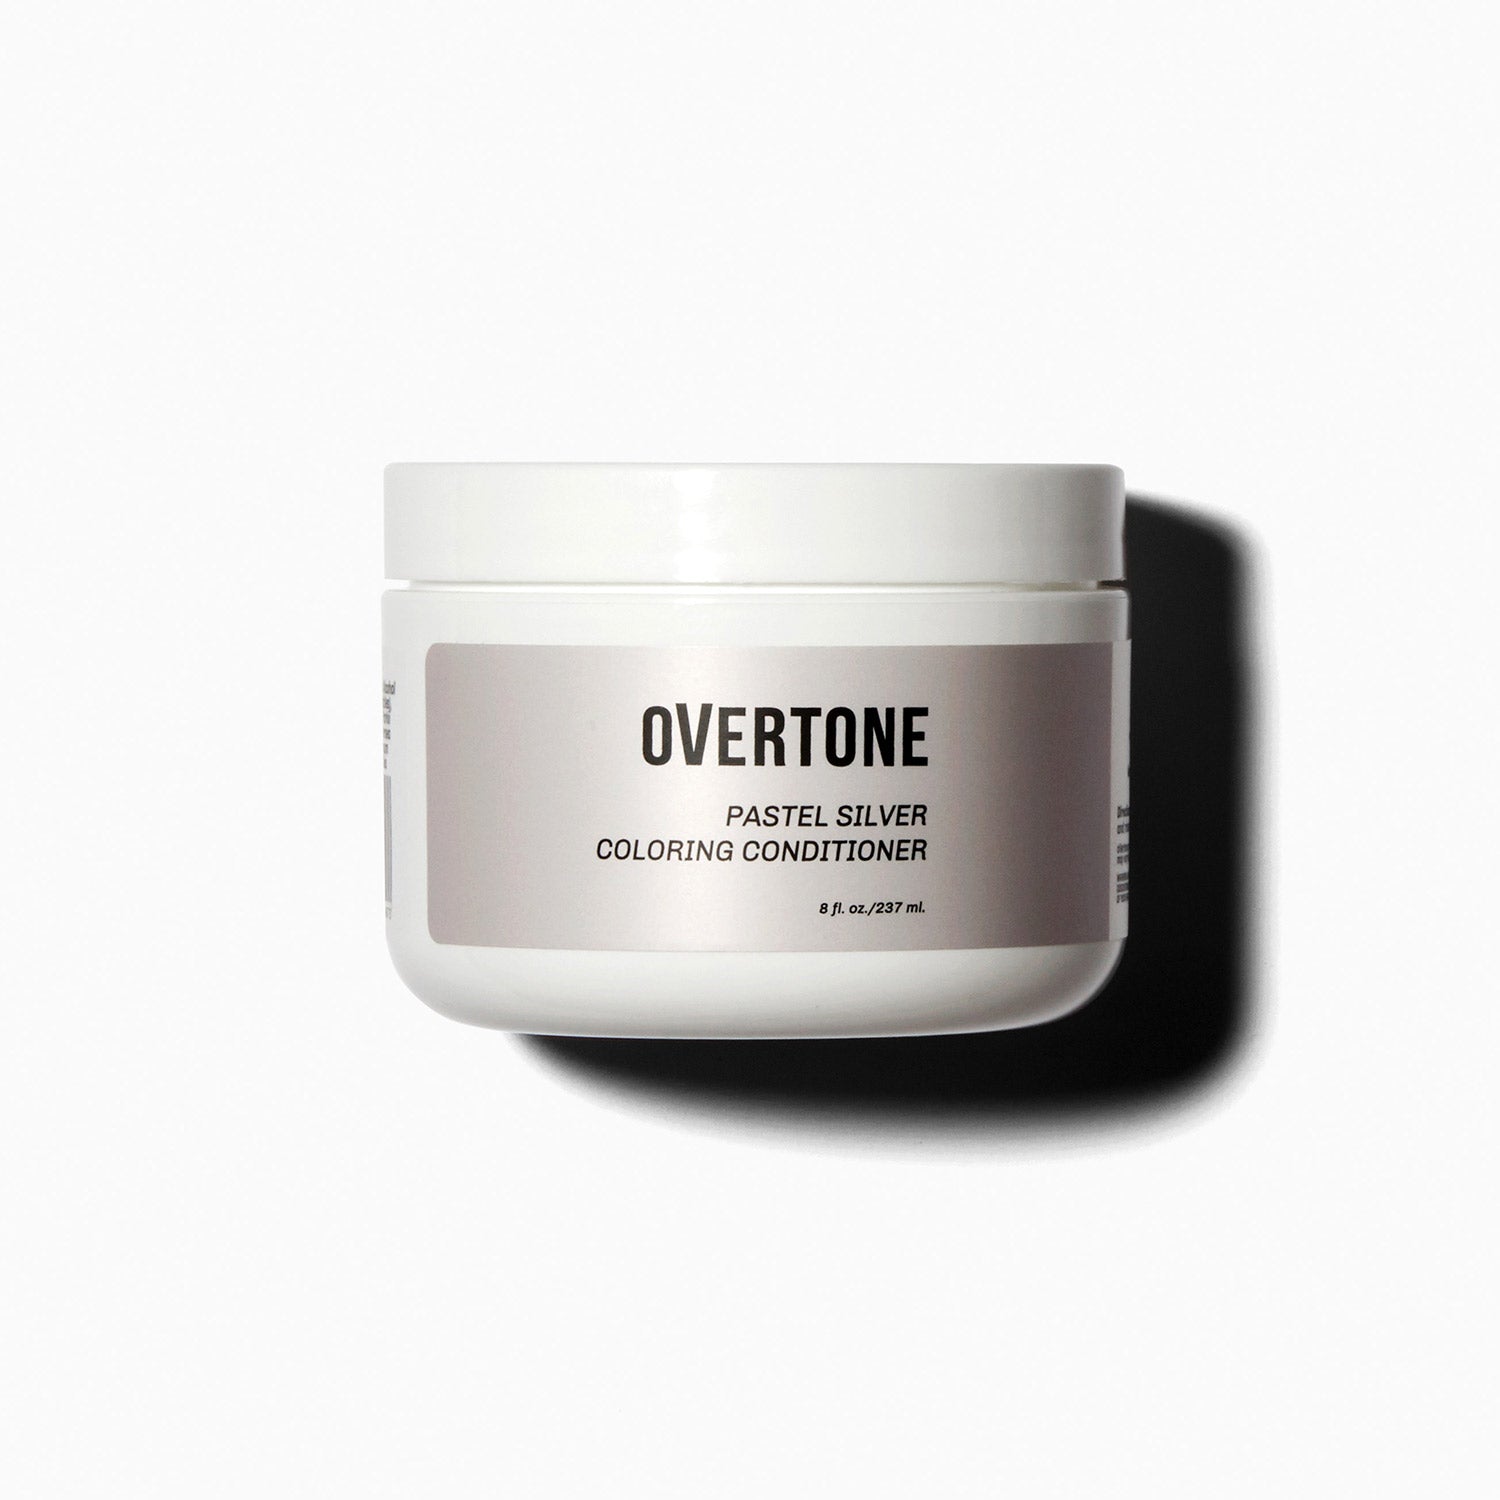 Pastel Silver Coloring Conditioner | oVertone Haircare